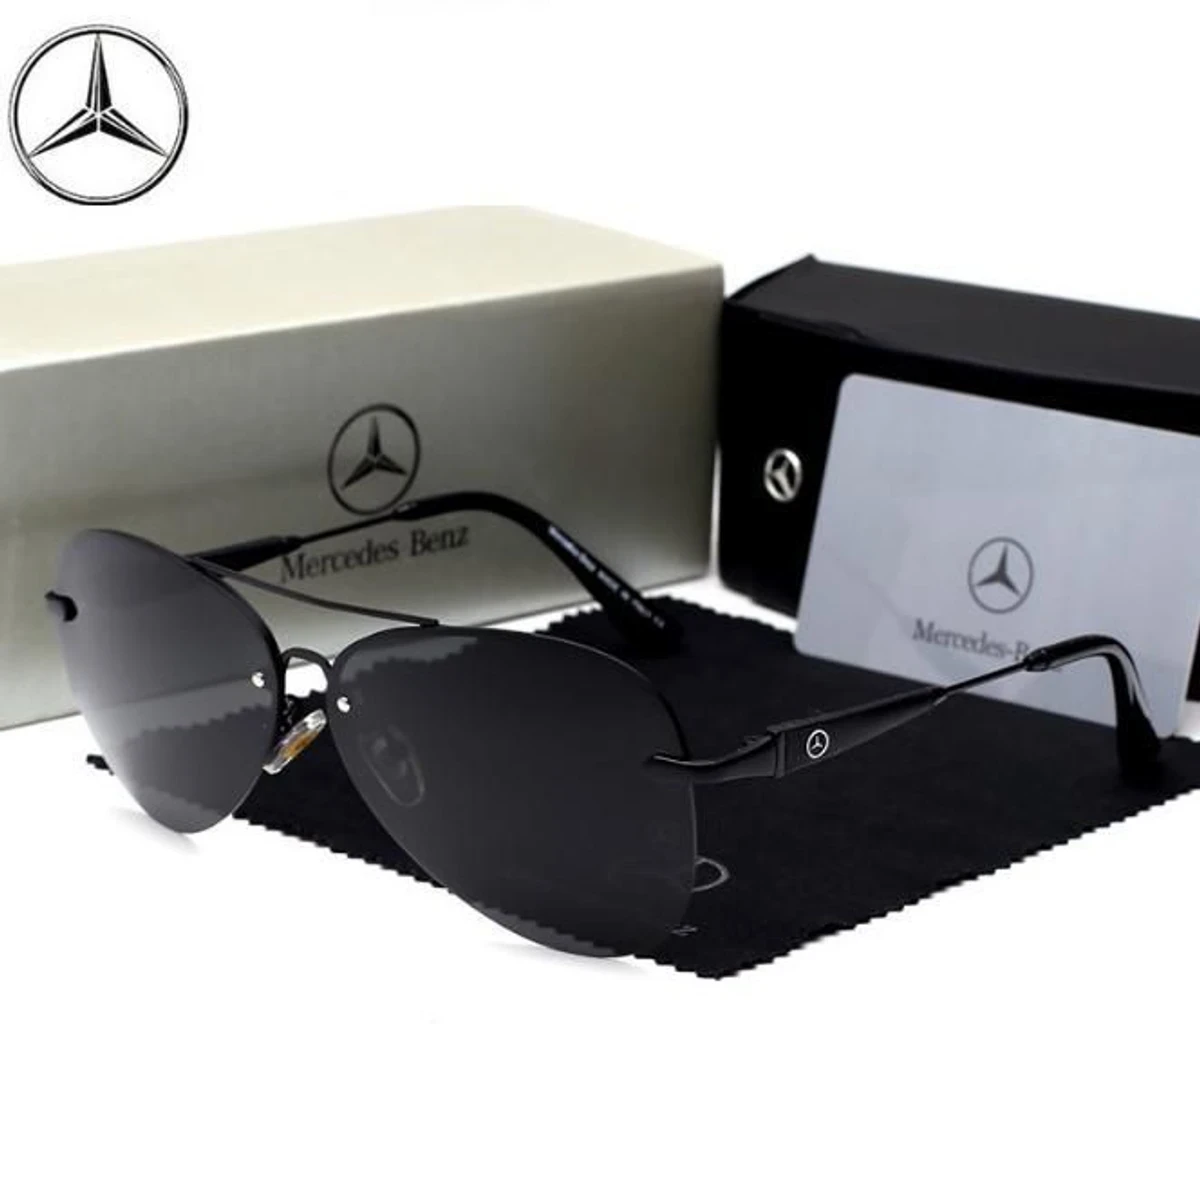 Luxury Mercedes-Benz Sunglass - M743G Black Replica Edition